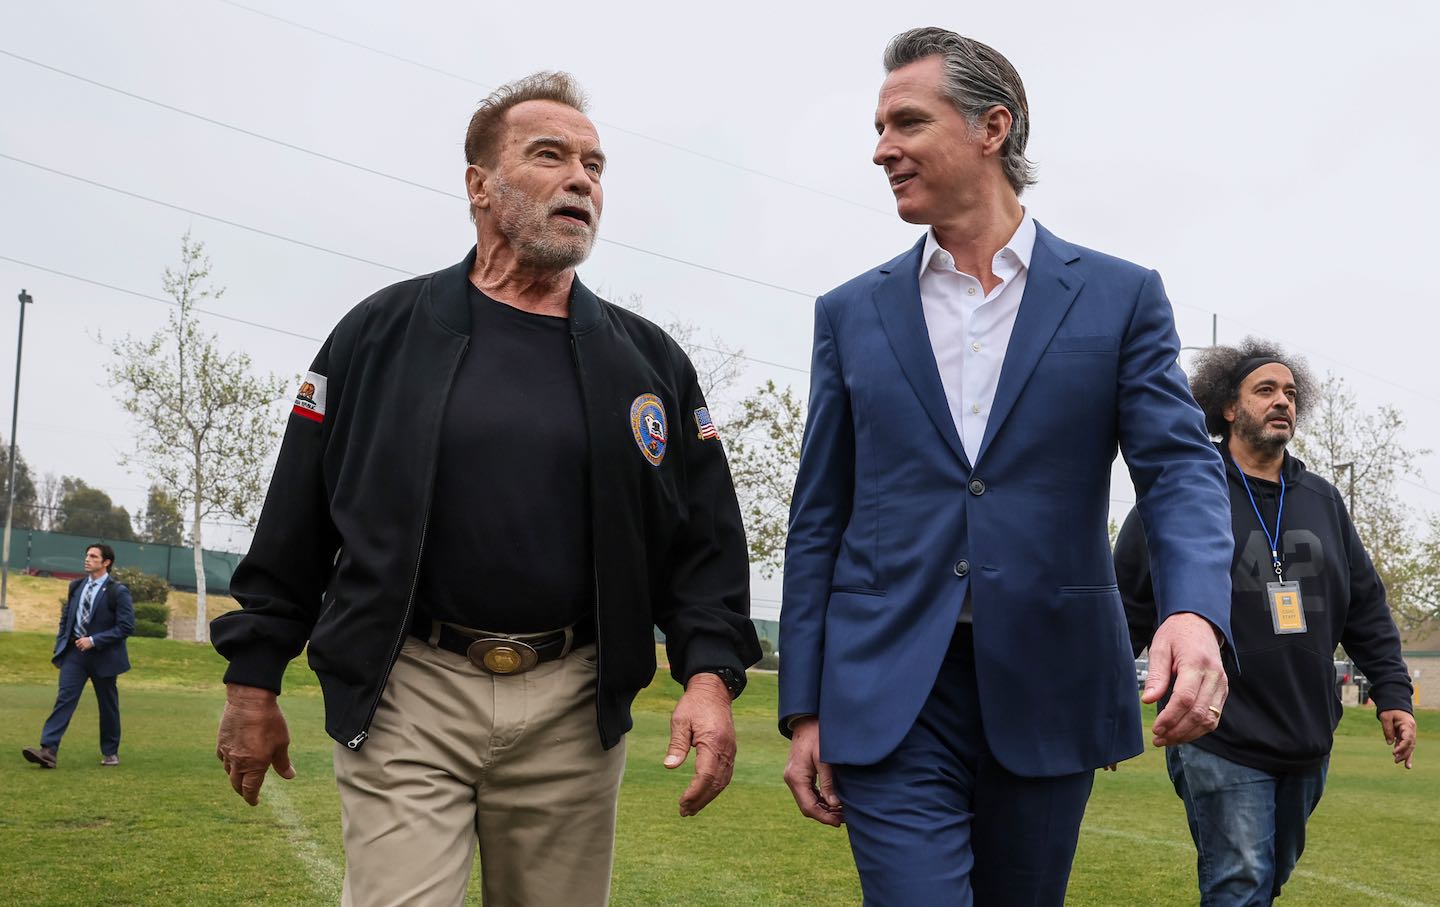 California Governor Gavin Newsom and former governor Arnold Schwarzenegger